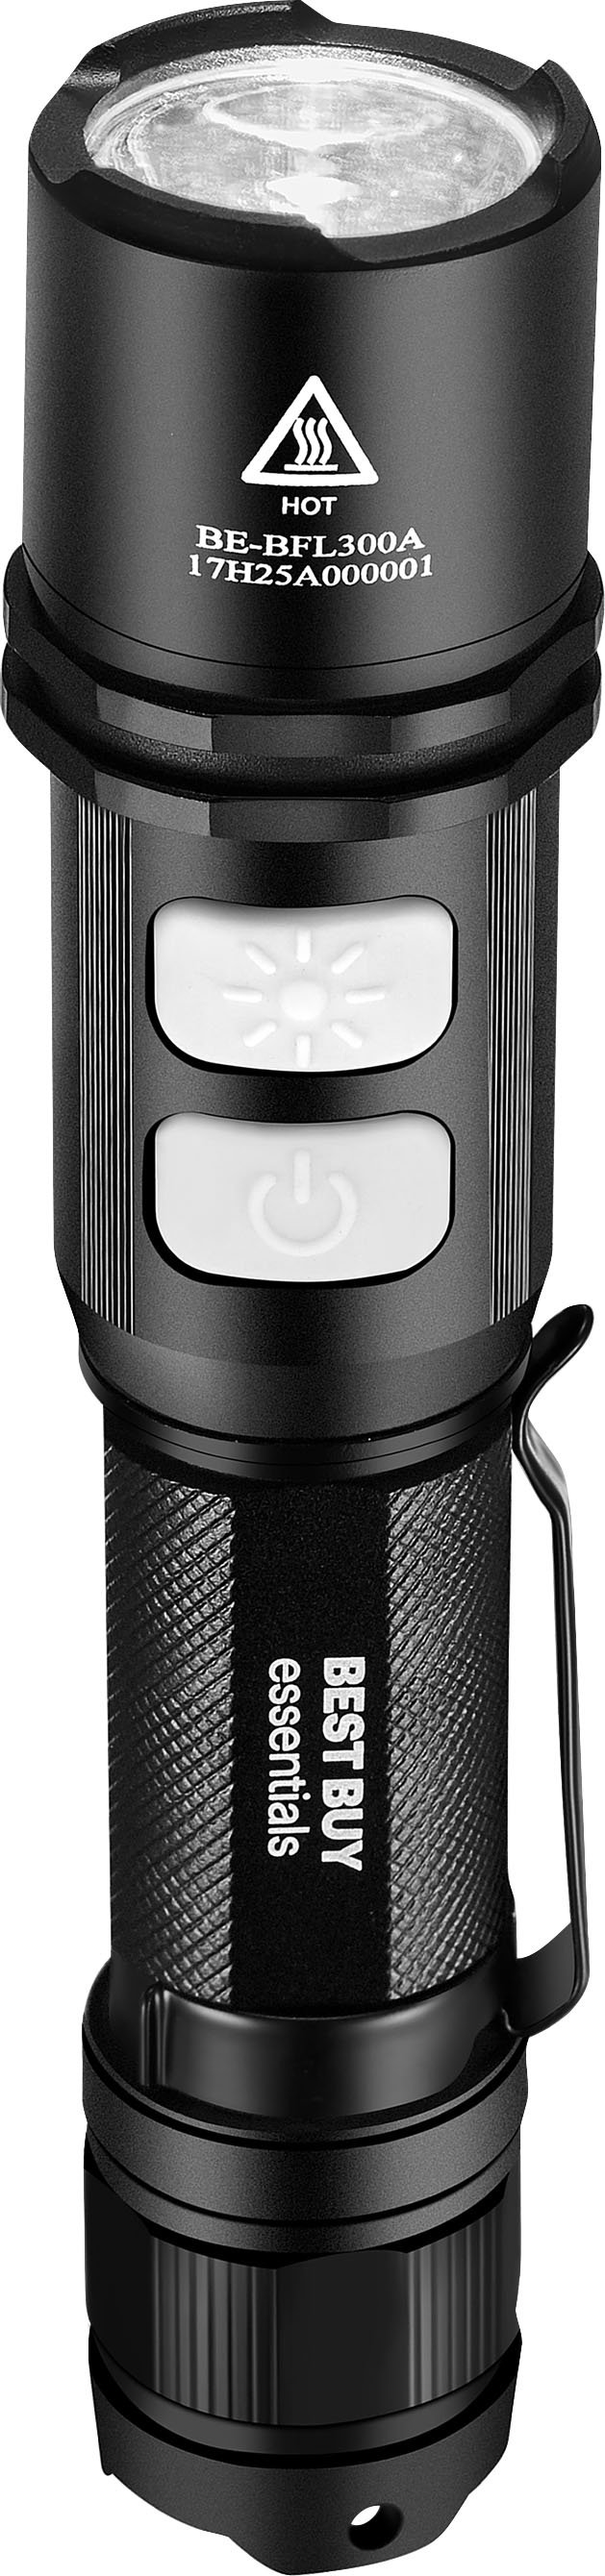 Buy essentials™ 800-Lumen Rechargeable LED Flashlight Black - Buy